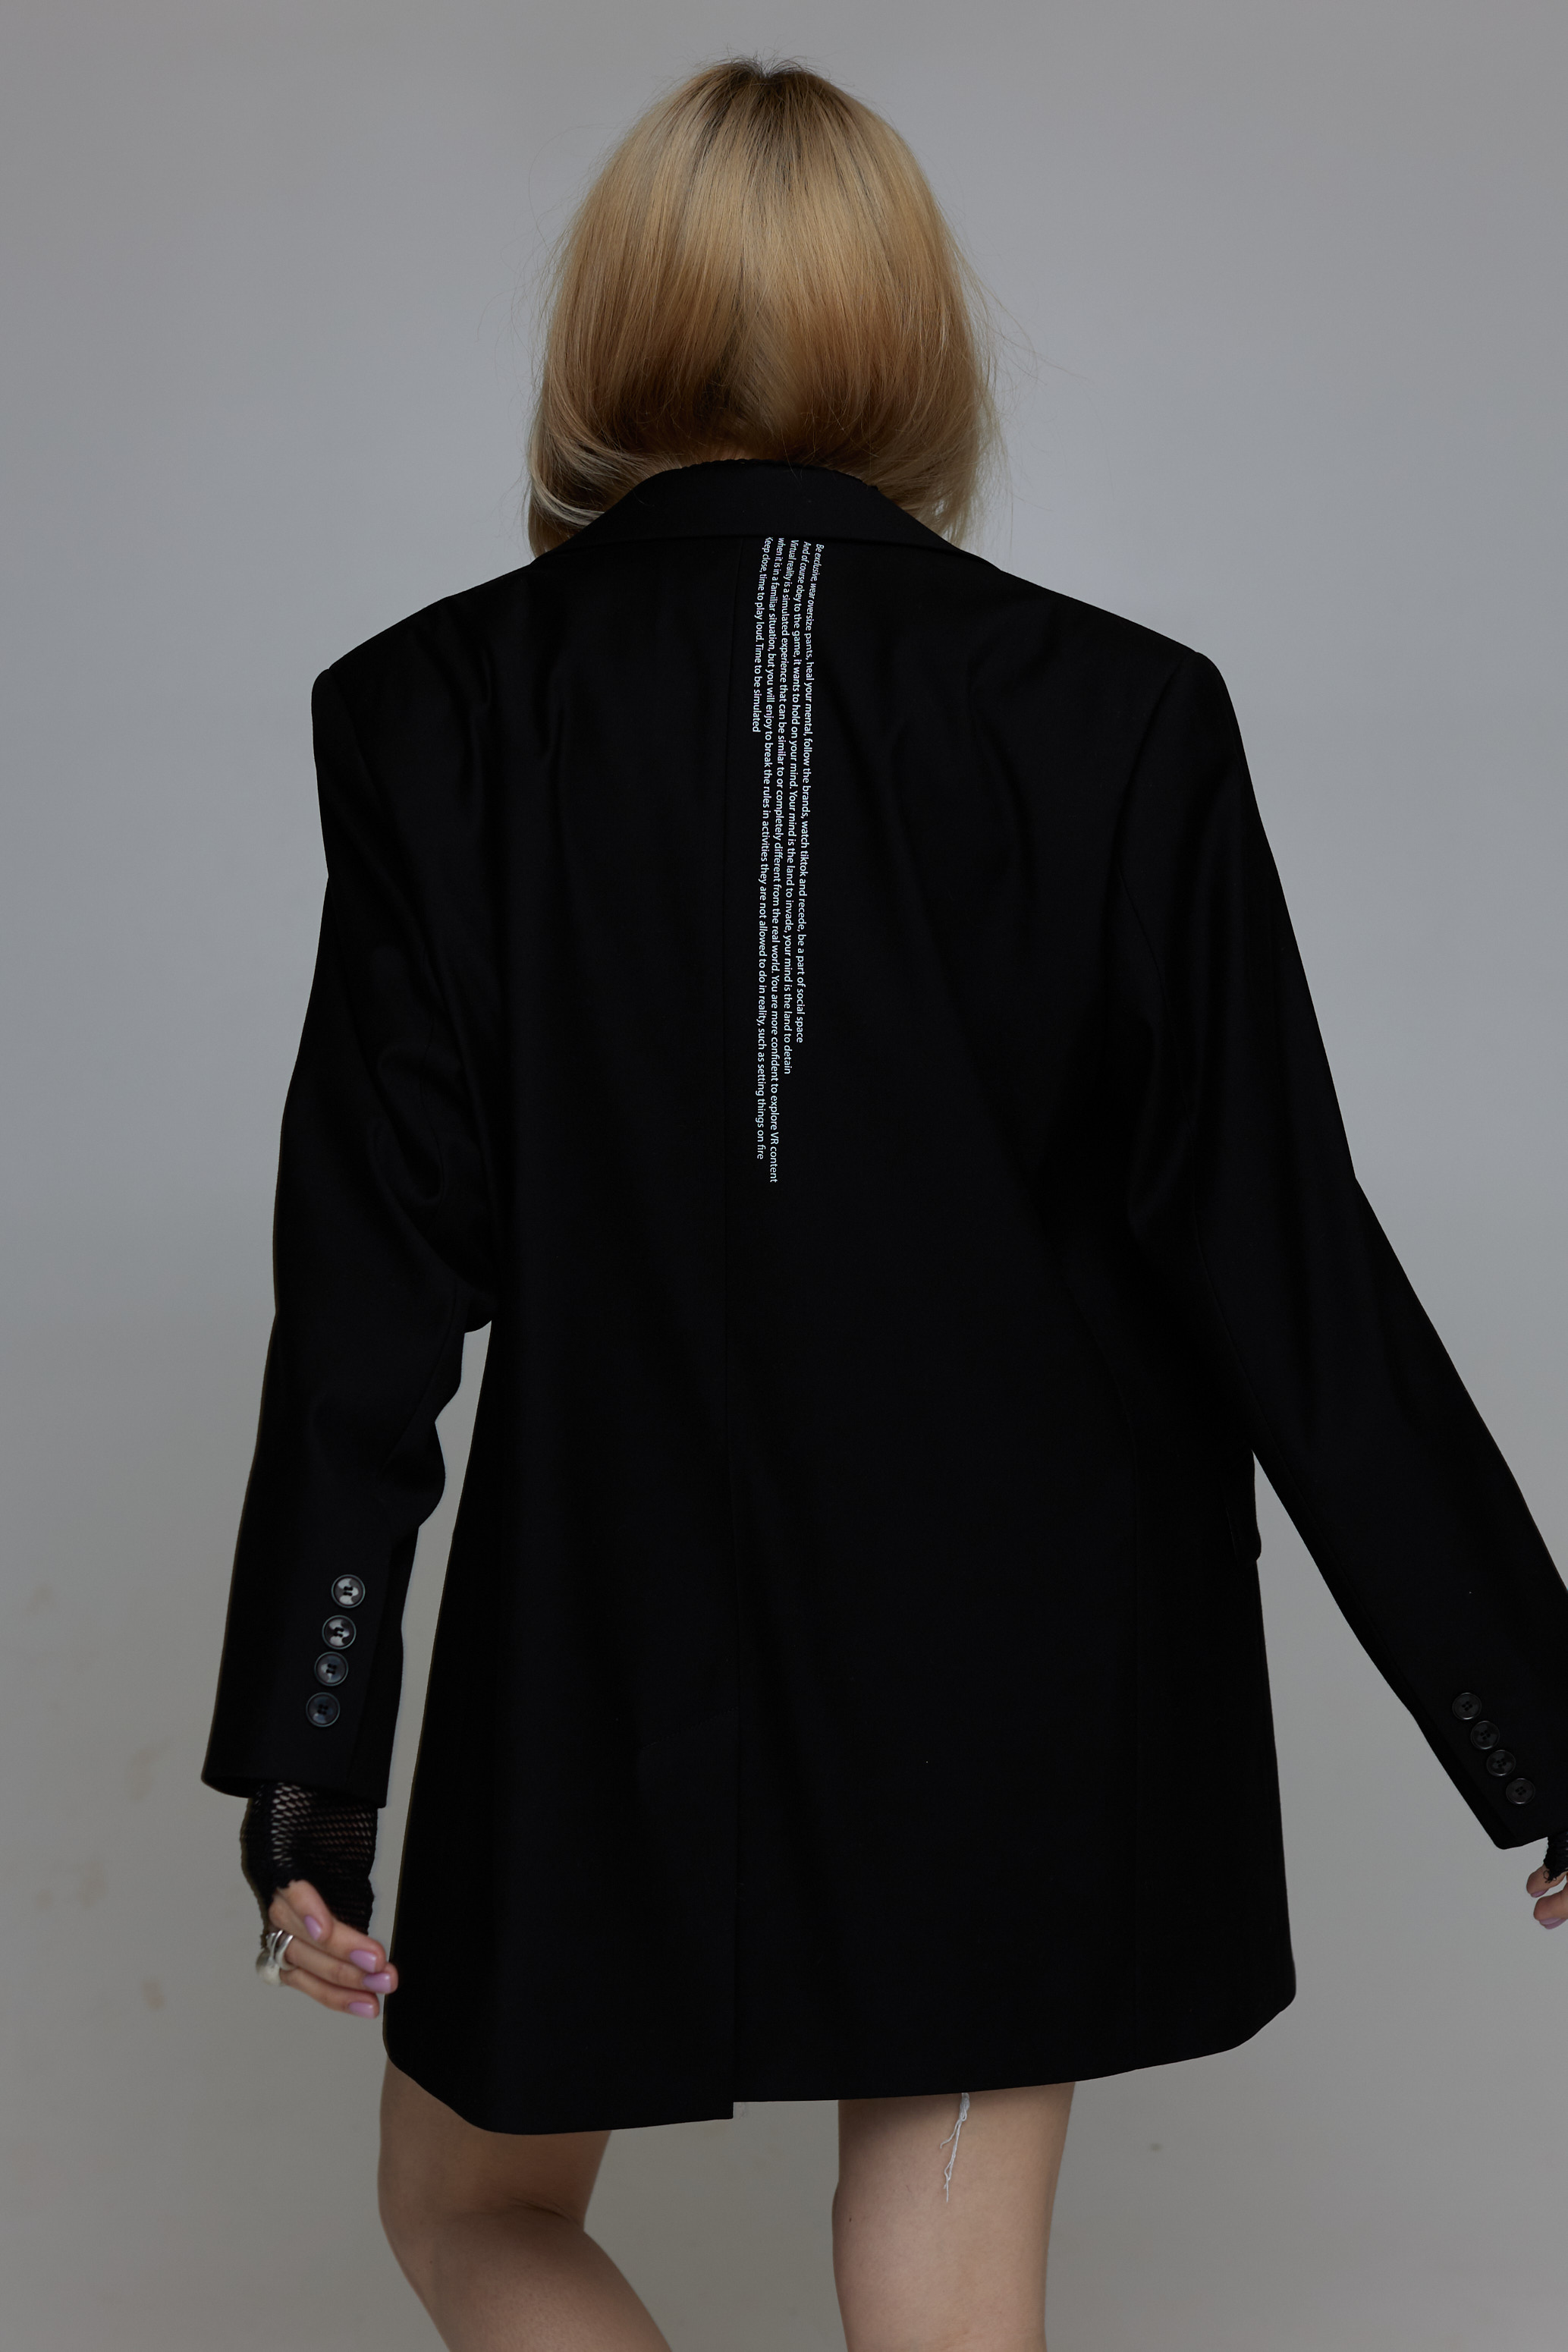 jacket 2.0 in black